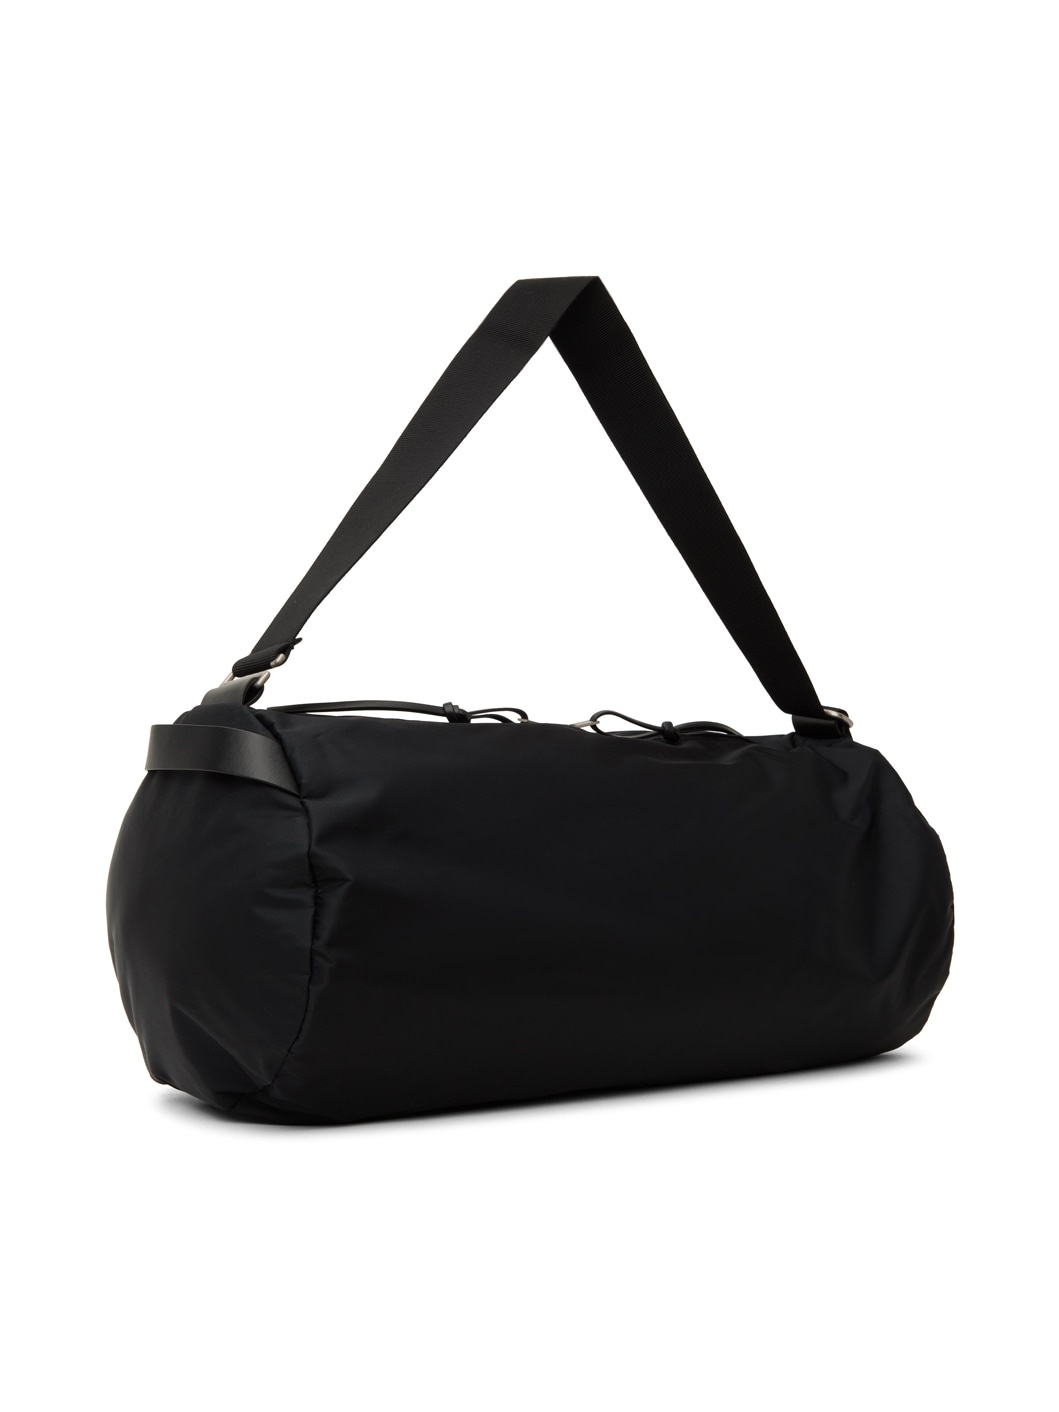 Black Gym Bag - 3